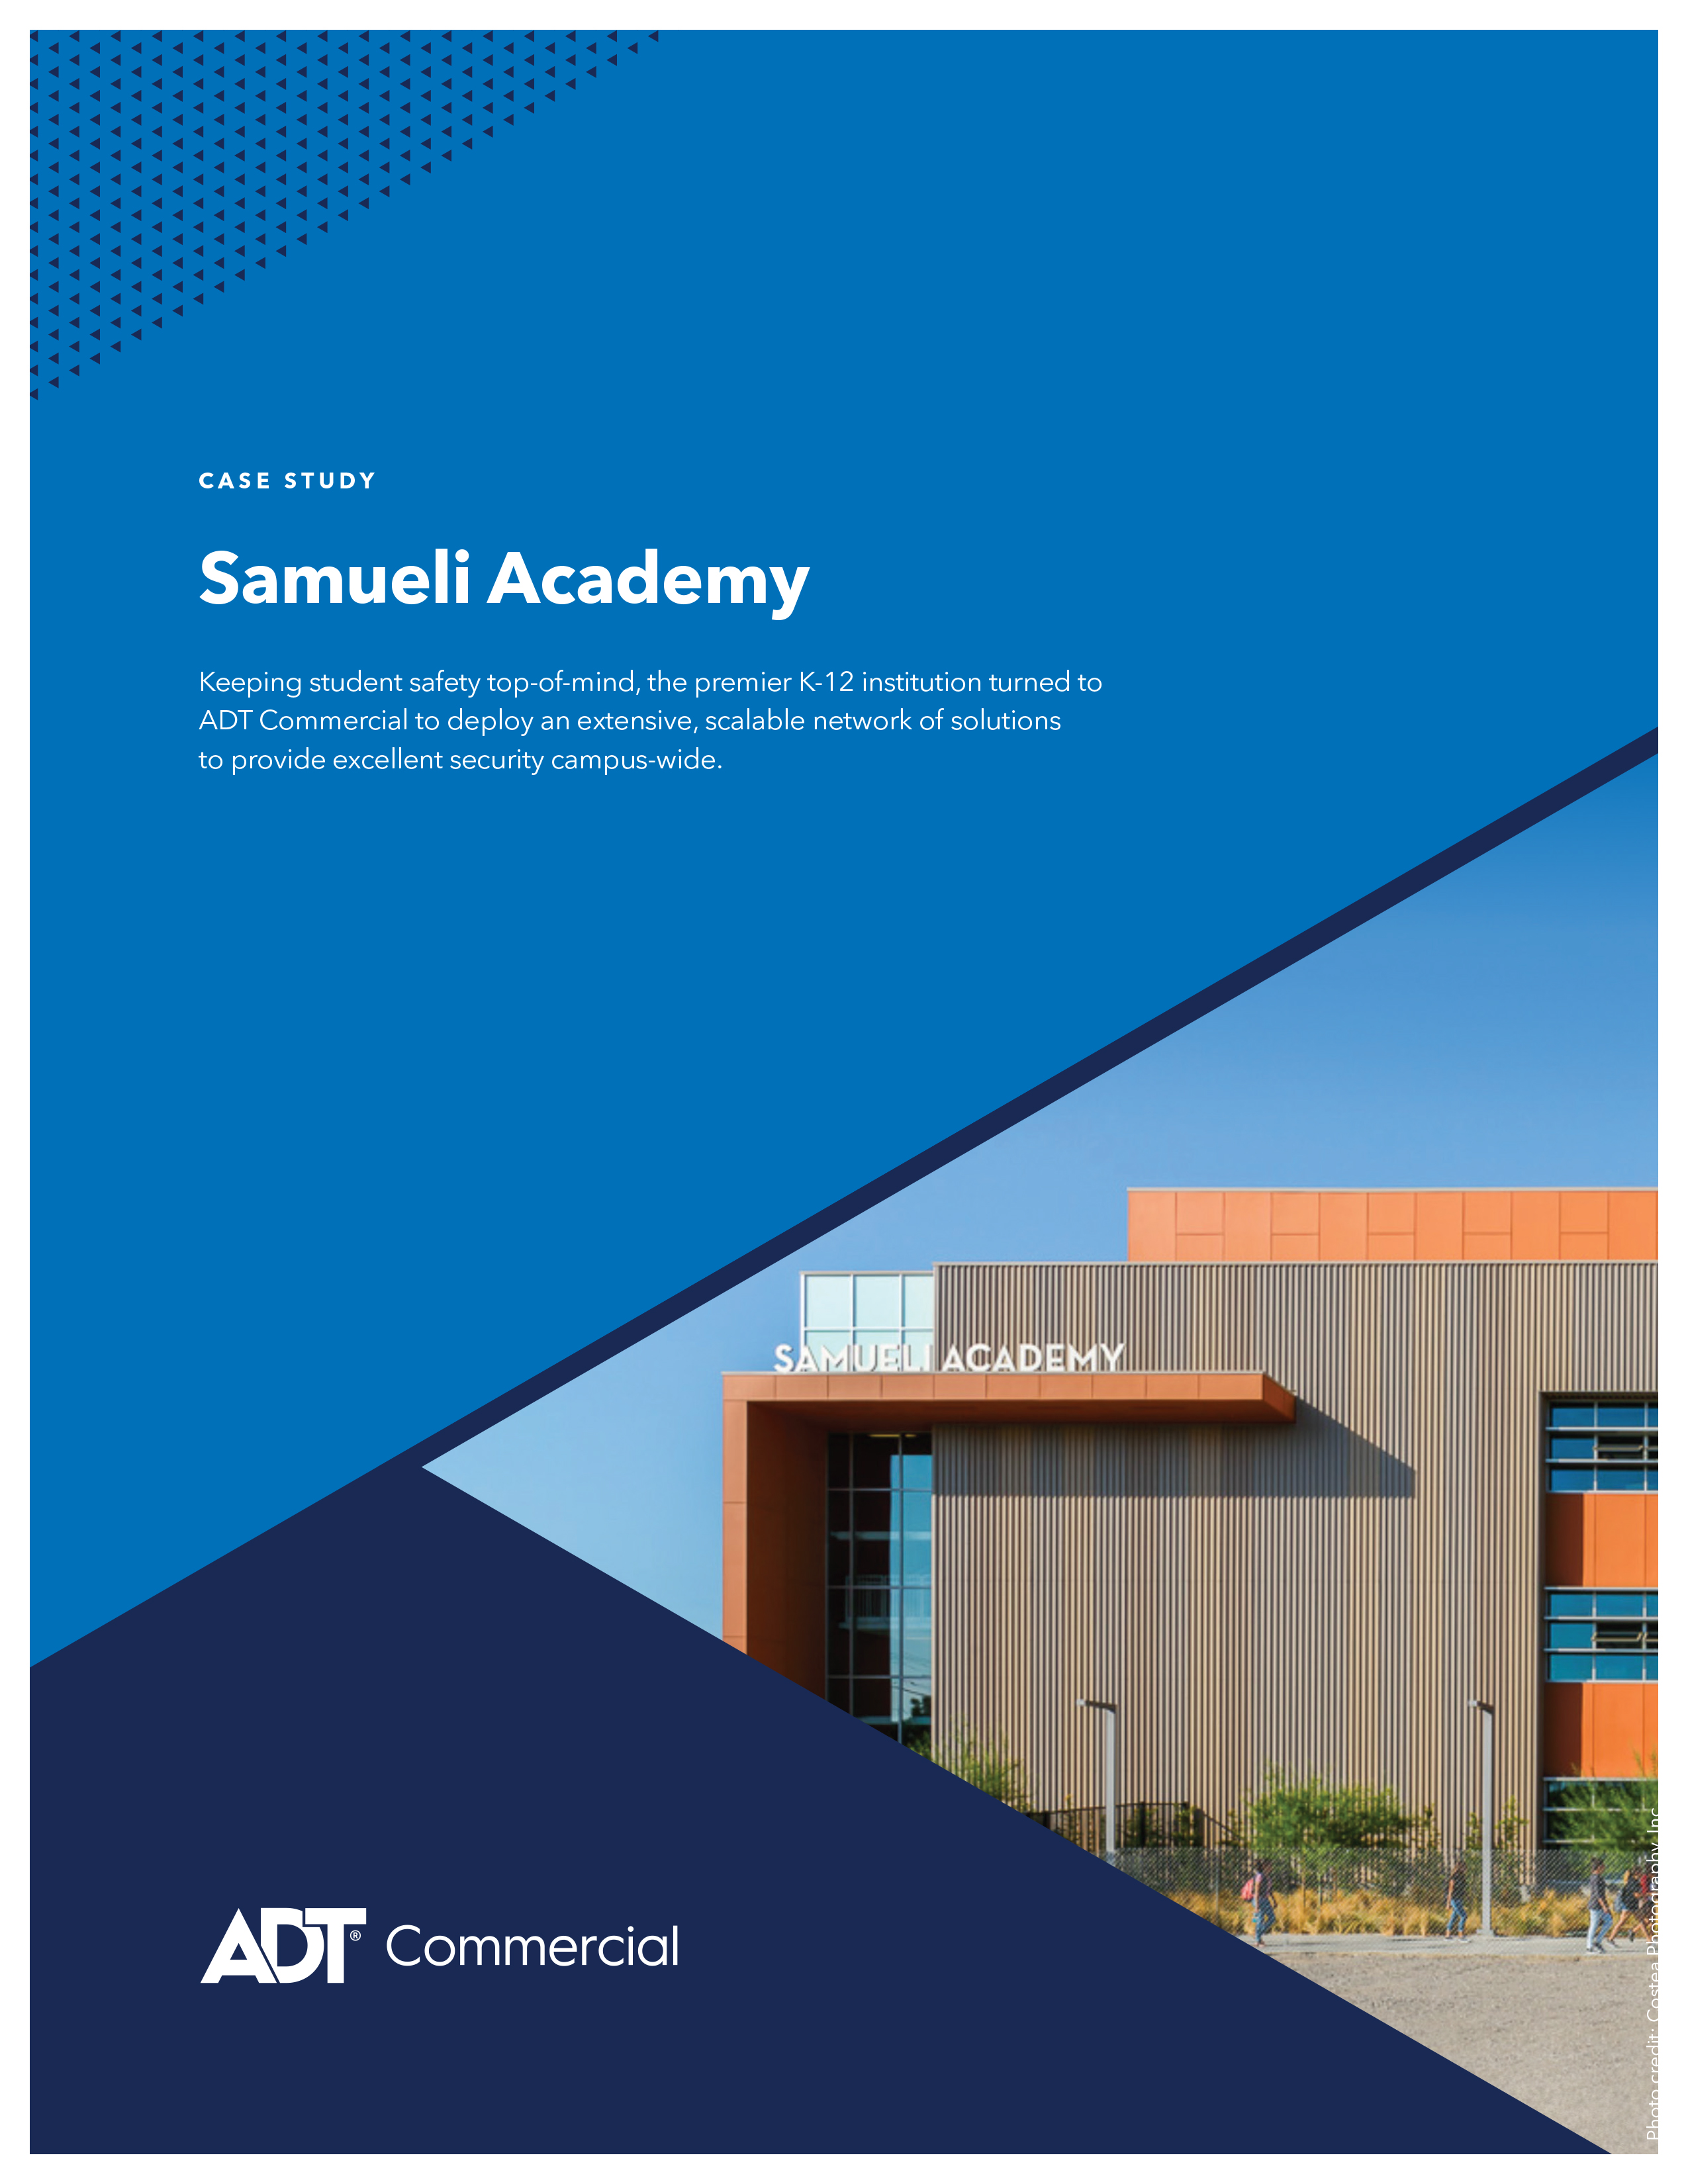 Samueli Academy case study